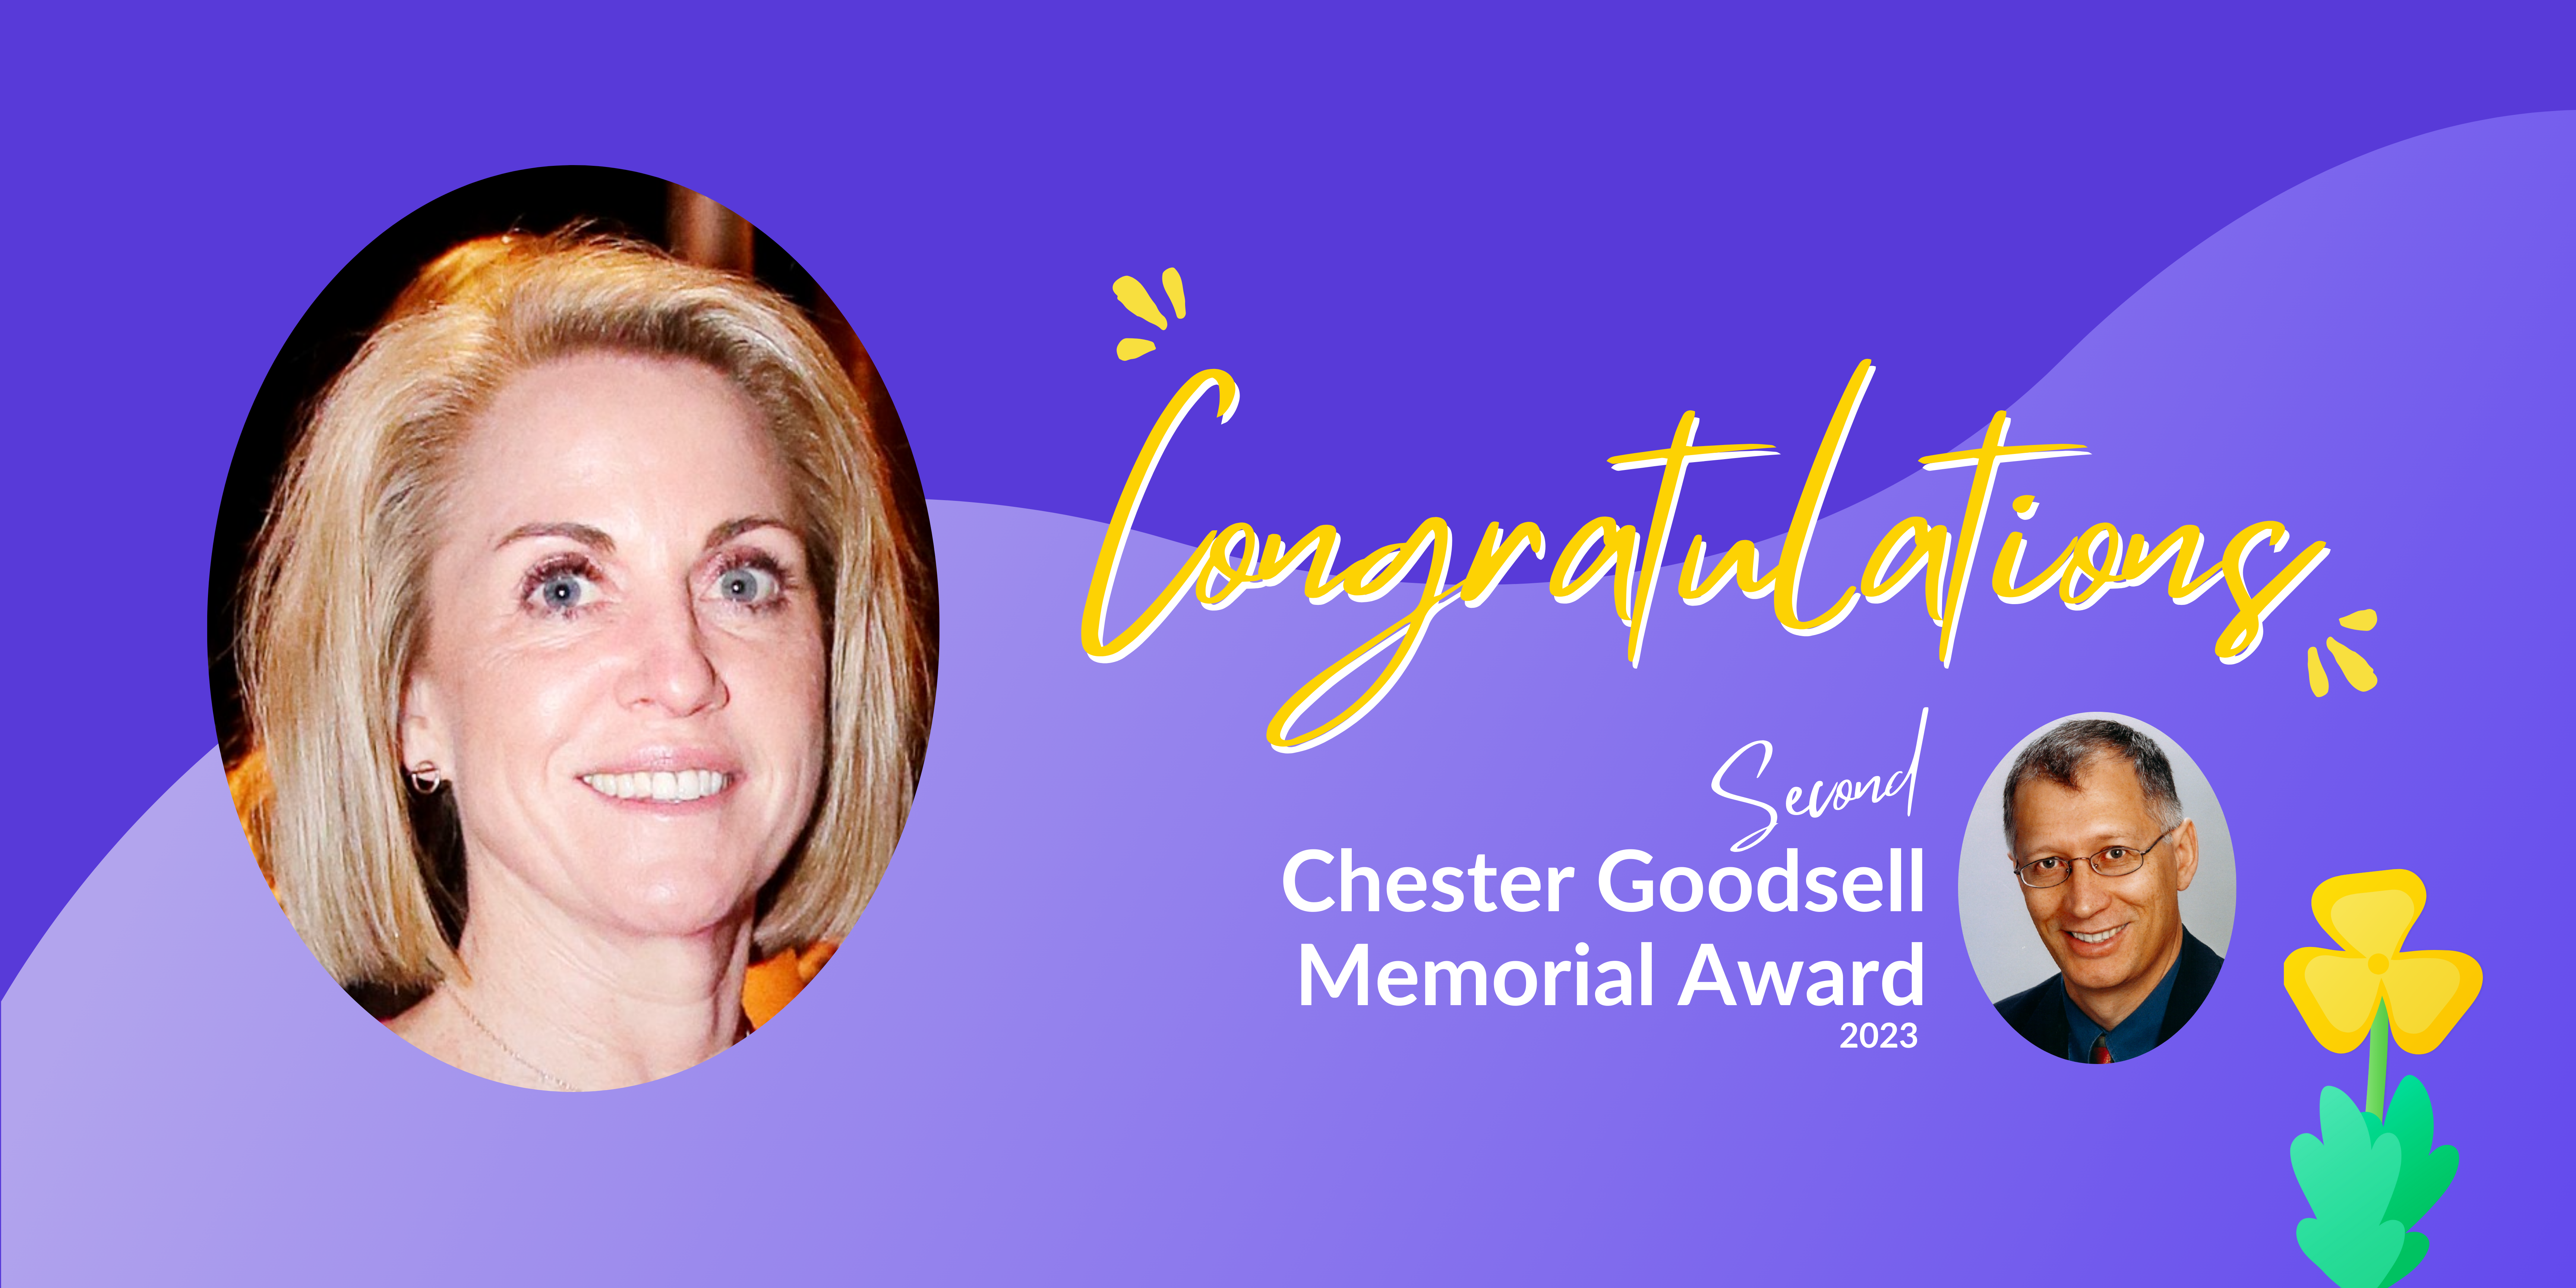 Chester Goodsell Memorial Award 2023 - Sally McCray.png